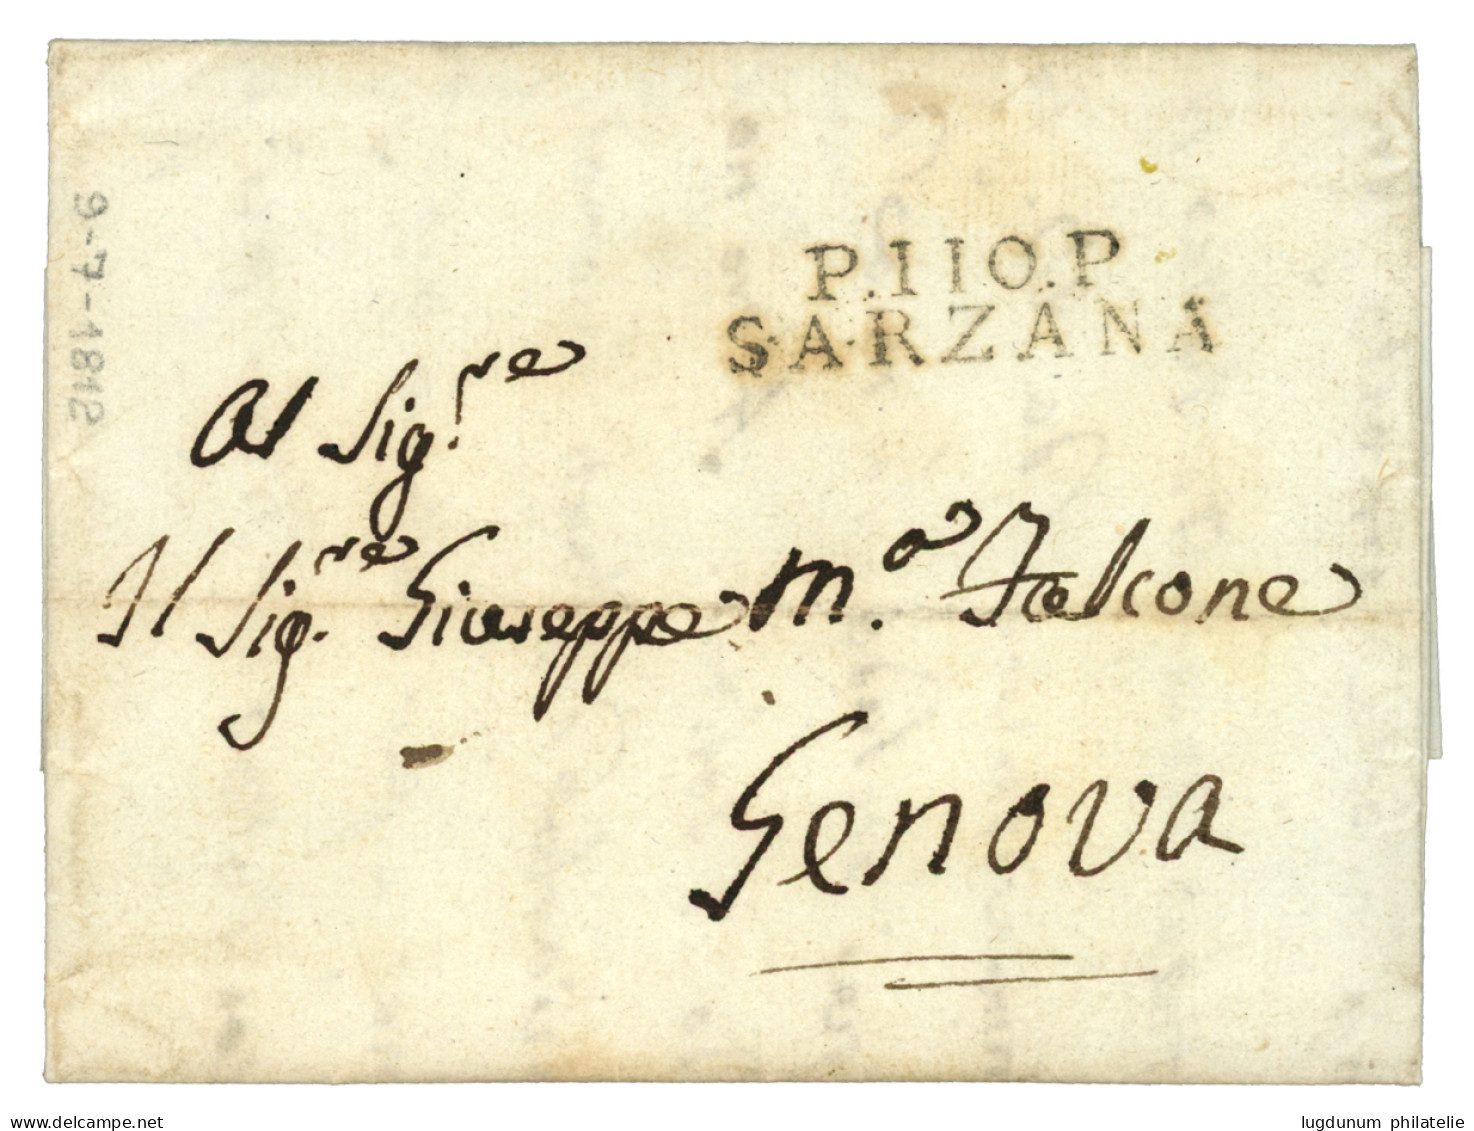 1812 P.110.P SARZANA Sur Lettre Avec Texte. Superbe. - 1792-1815 : Departamentos Conquistados